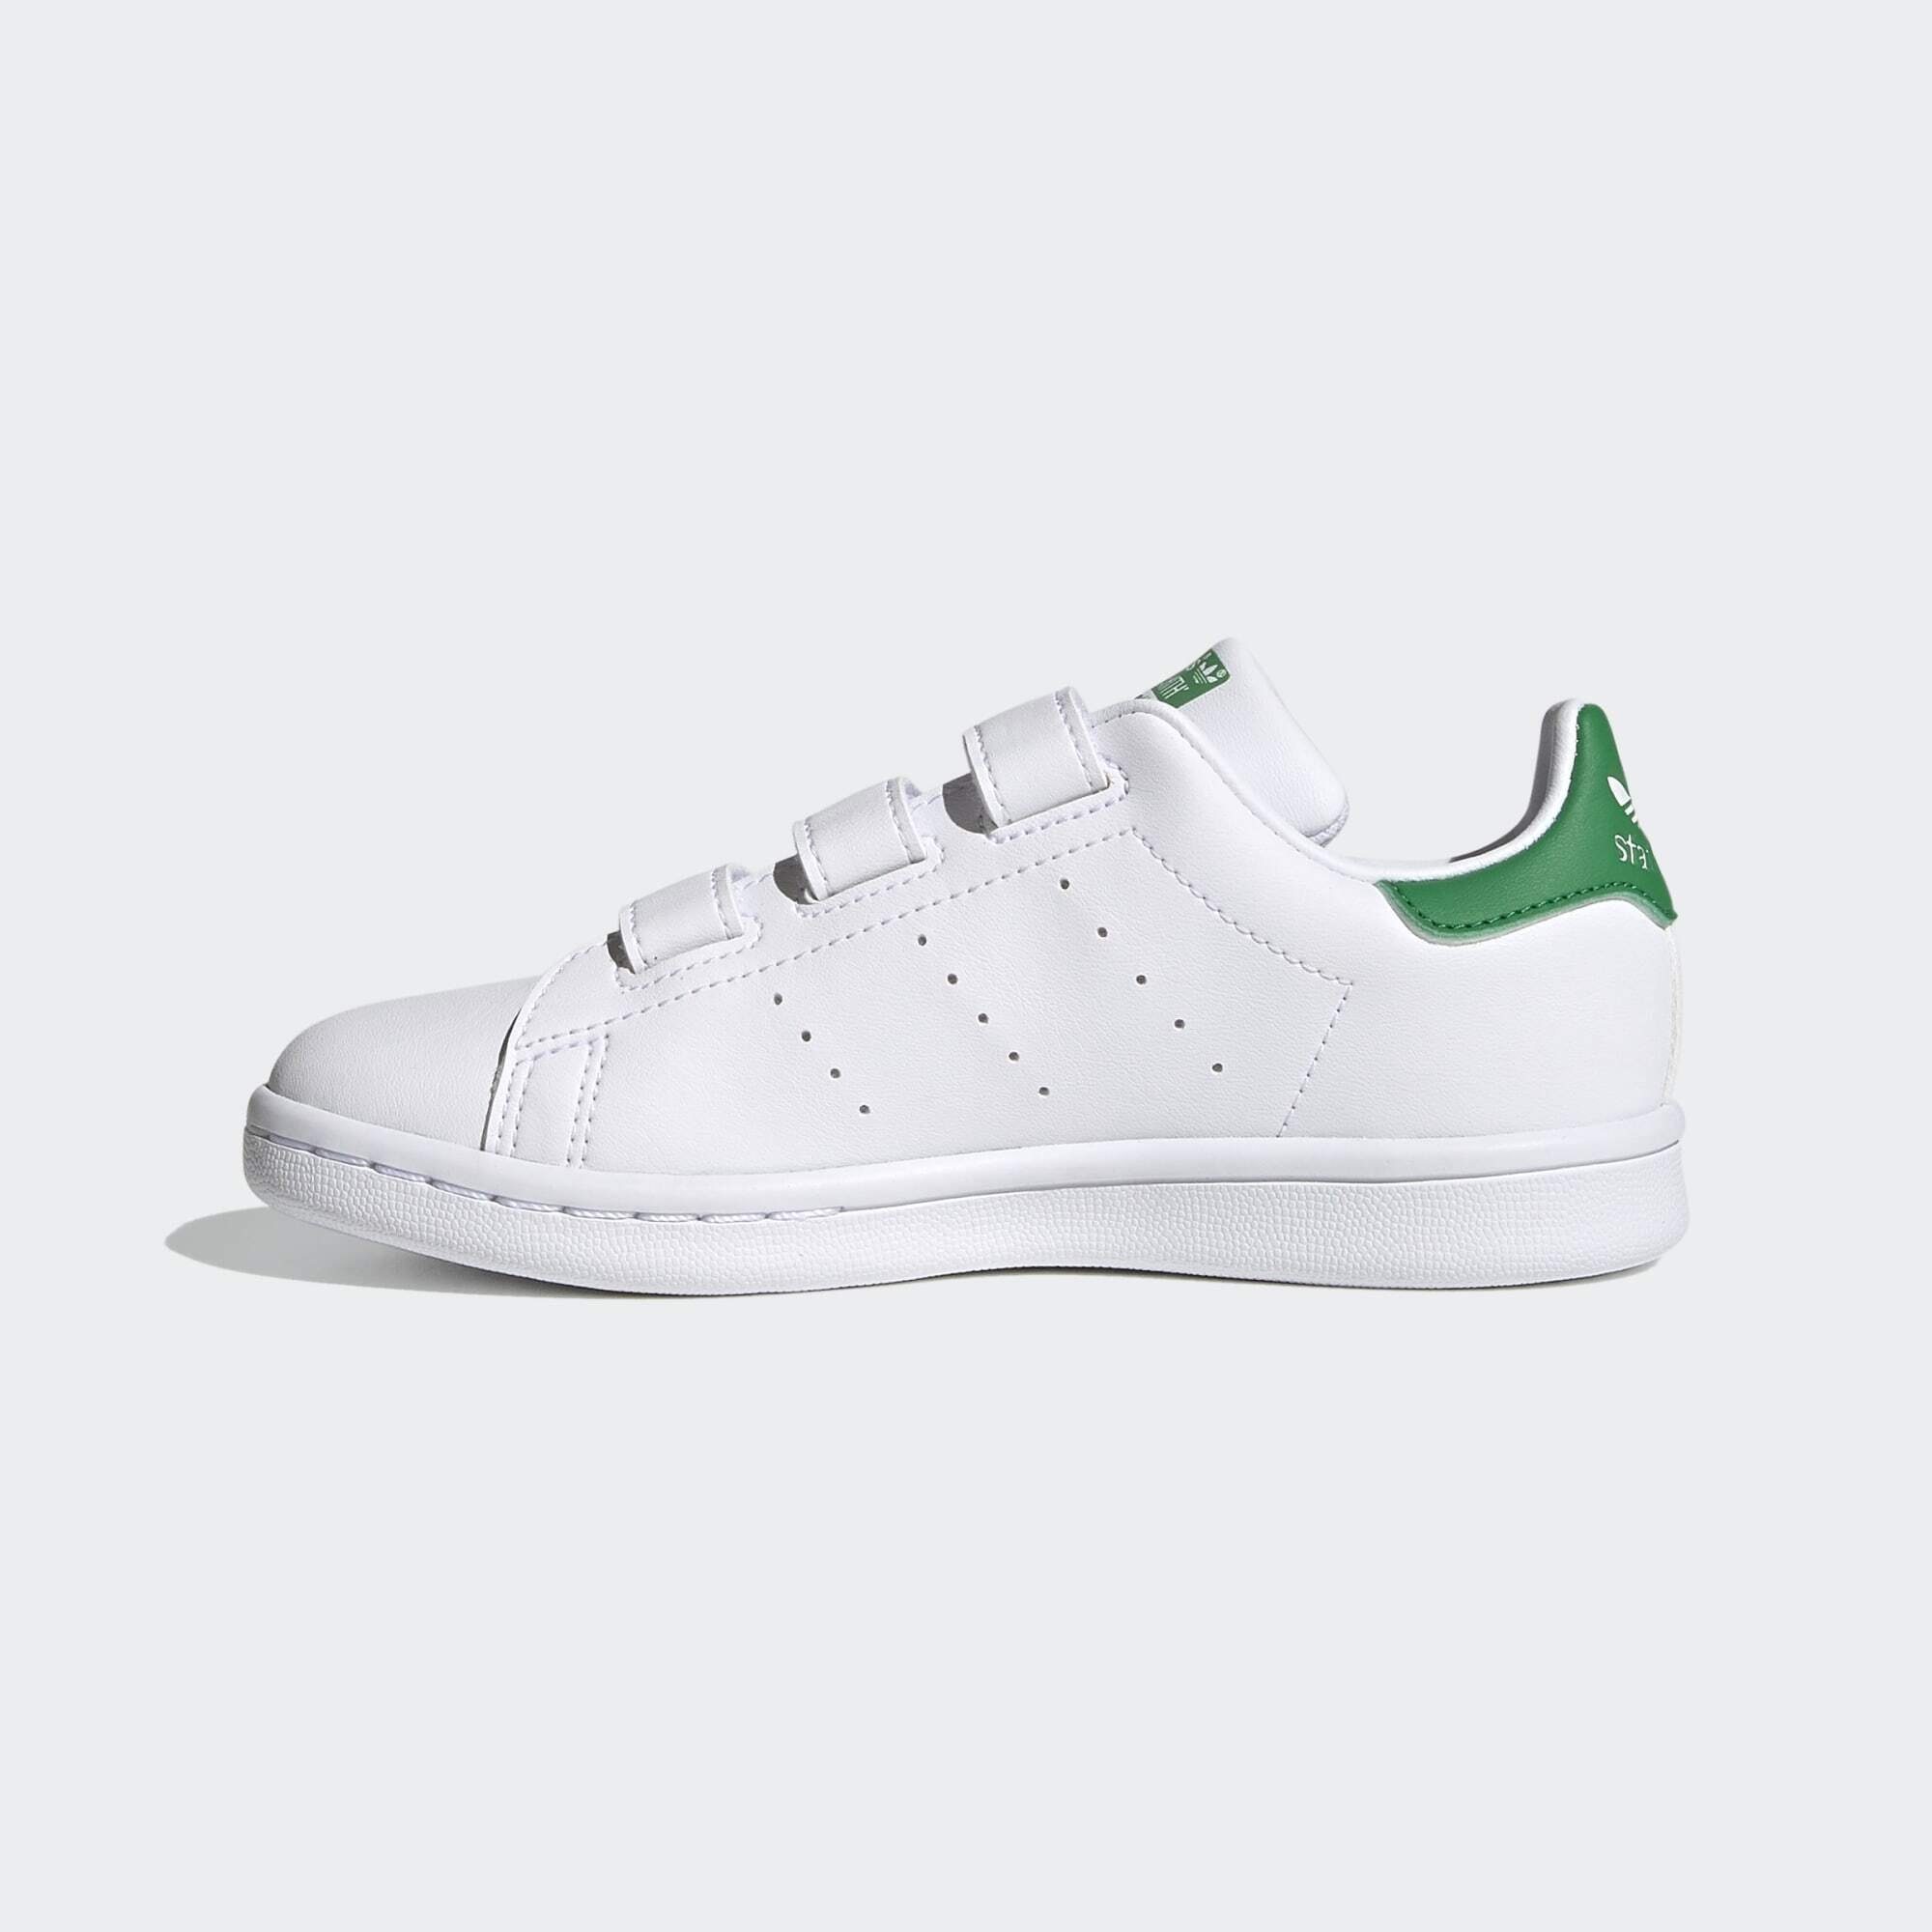 SCHUH White Green adidas Cloud SMITH / STAN White Sneaker Originals / Cloud